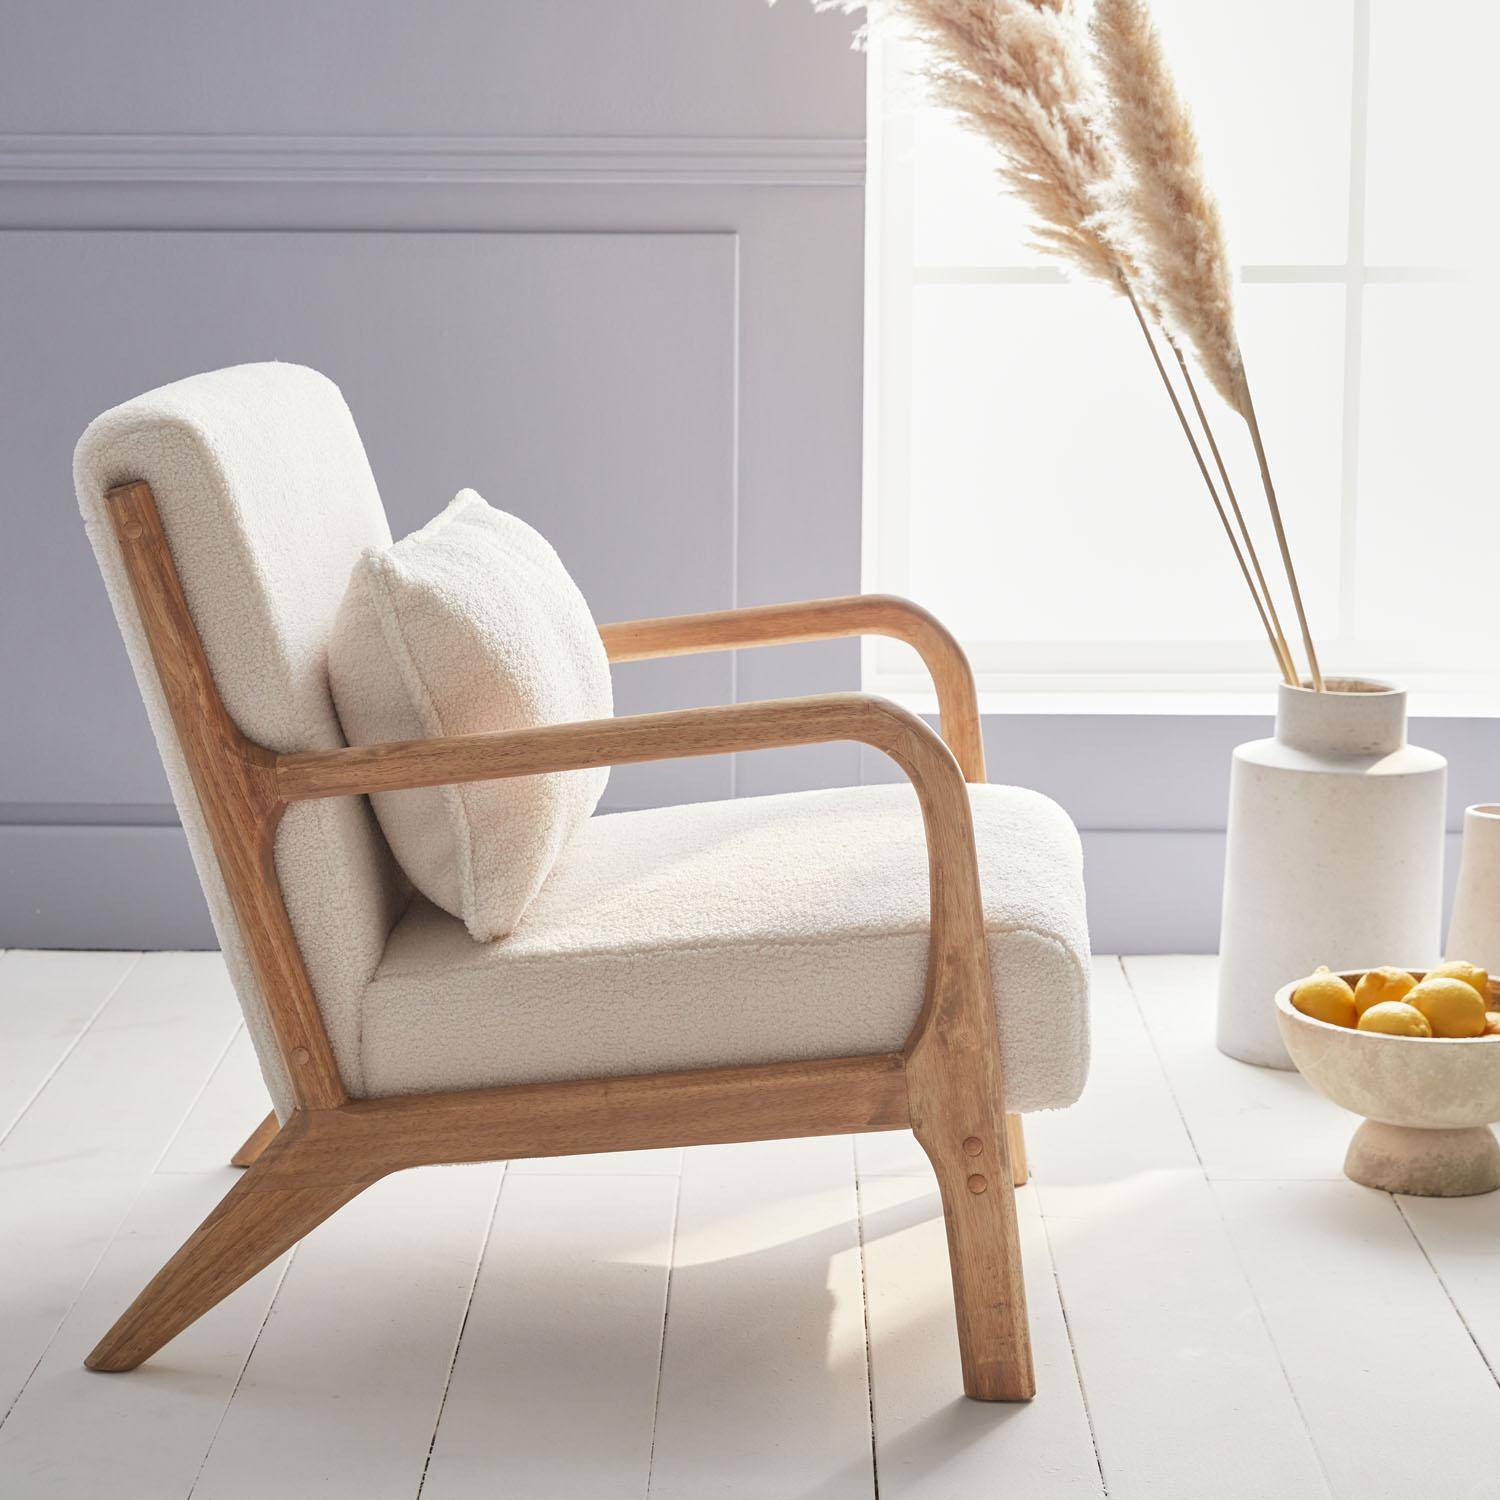 Poltrona di design in legno e tessuto bouclé, 1 seduta fissa diritta, gambe a compasso scandinave, beige,sweeek,Photo3